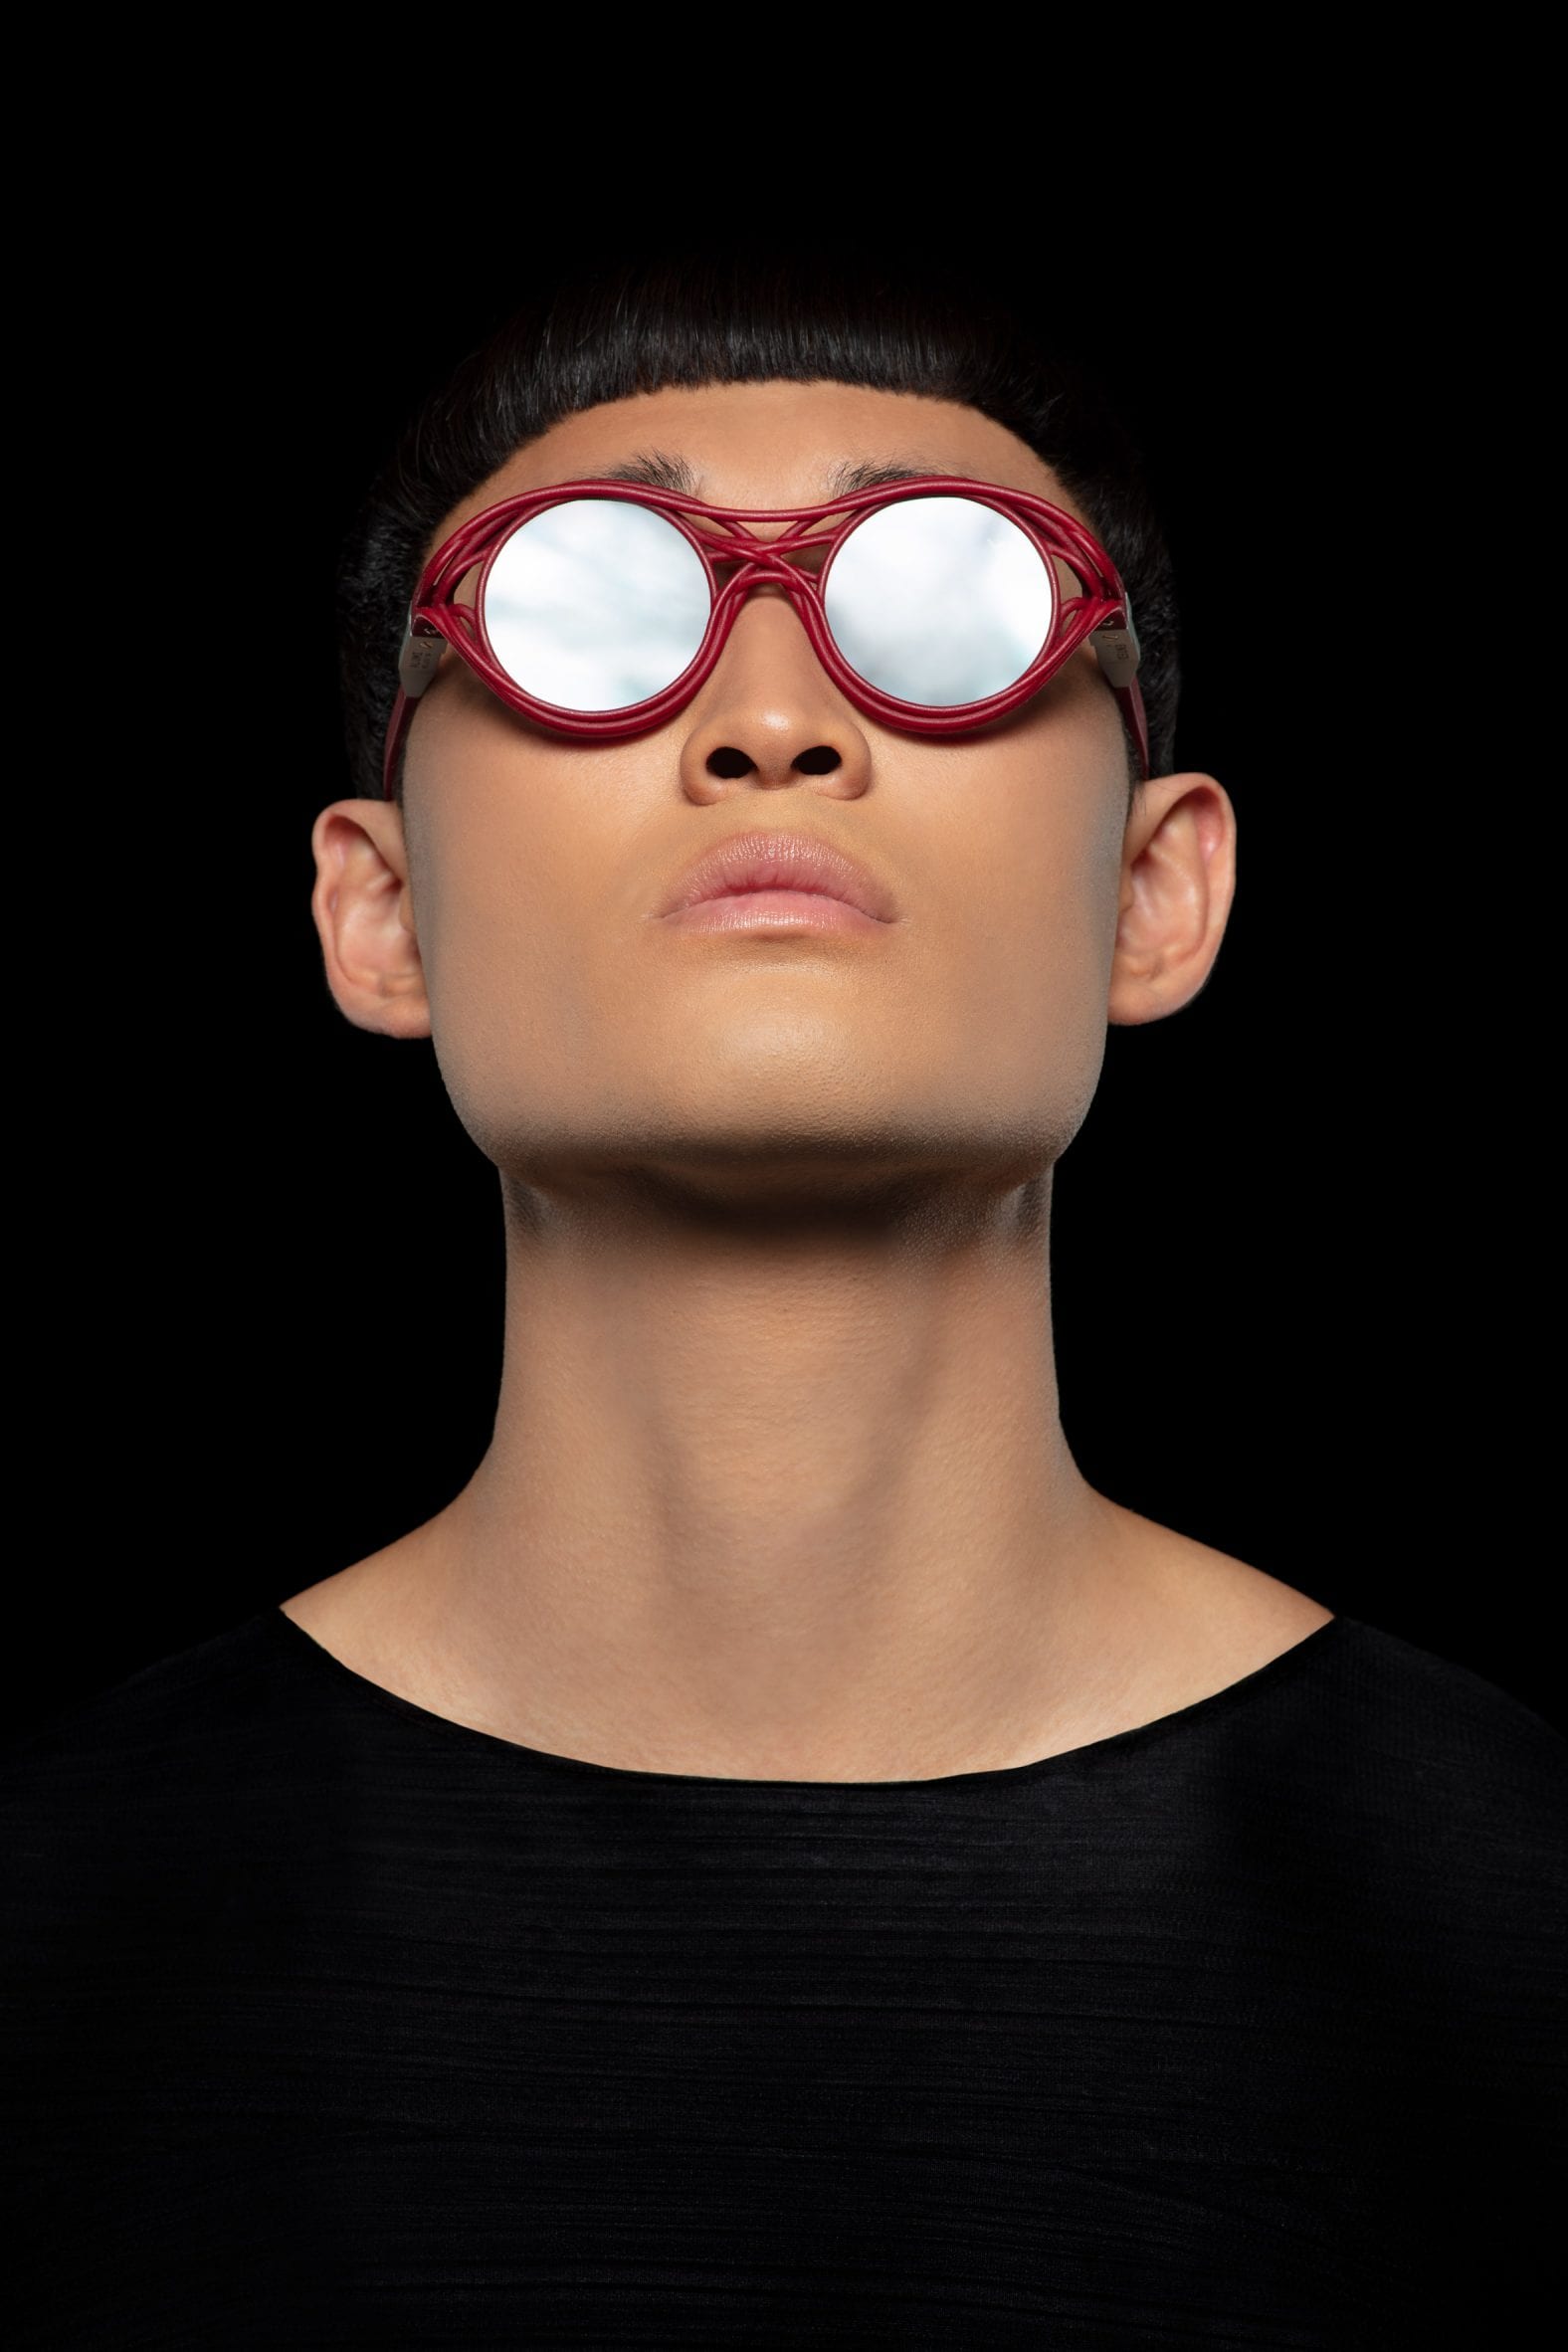 A man wearing a red pair of Kengo Kuma's sunglasses